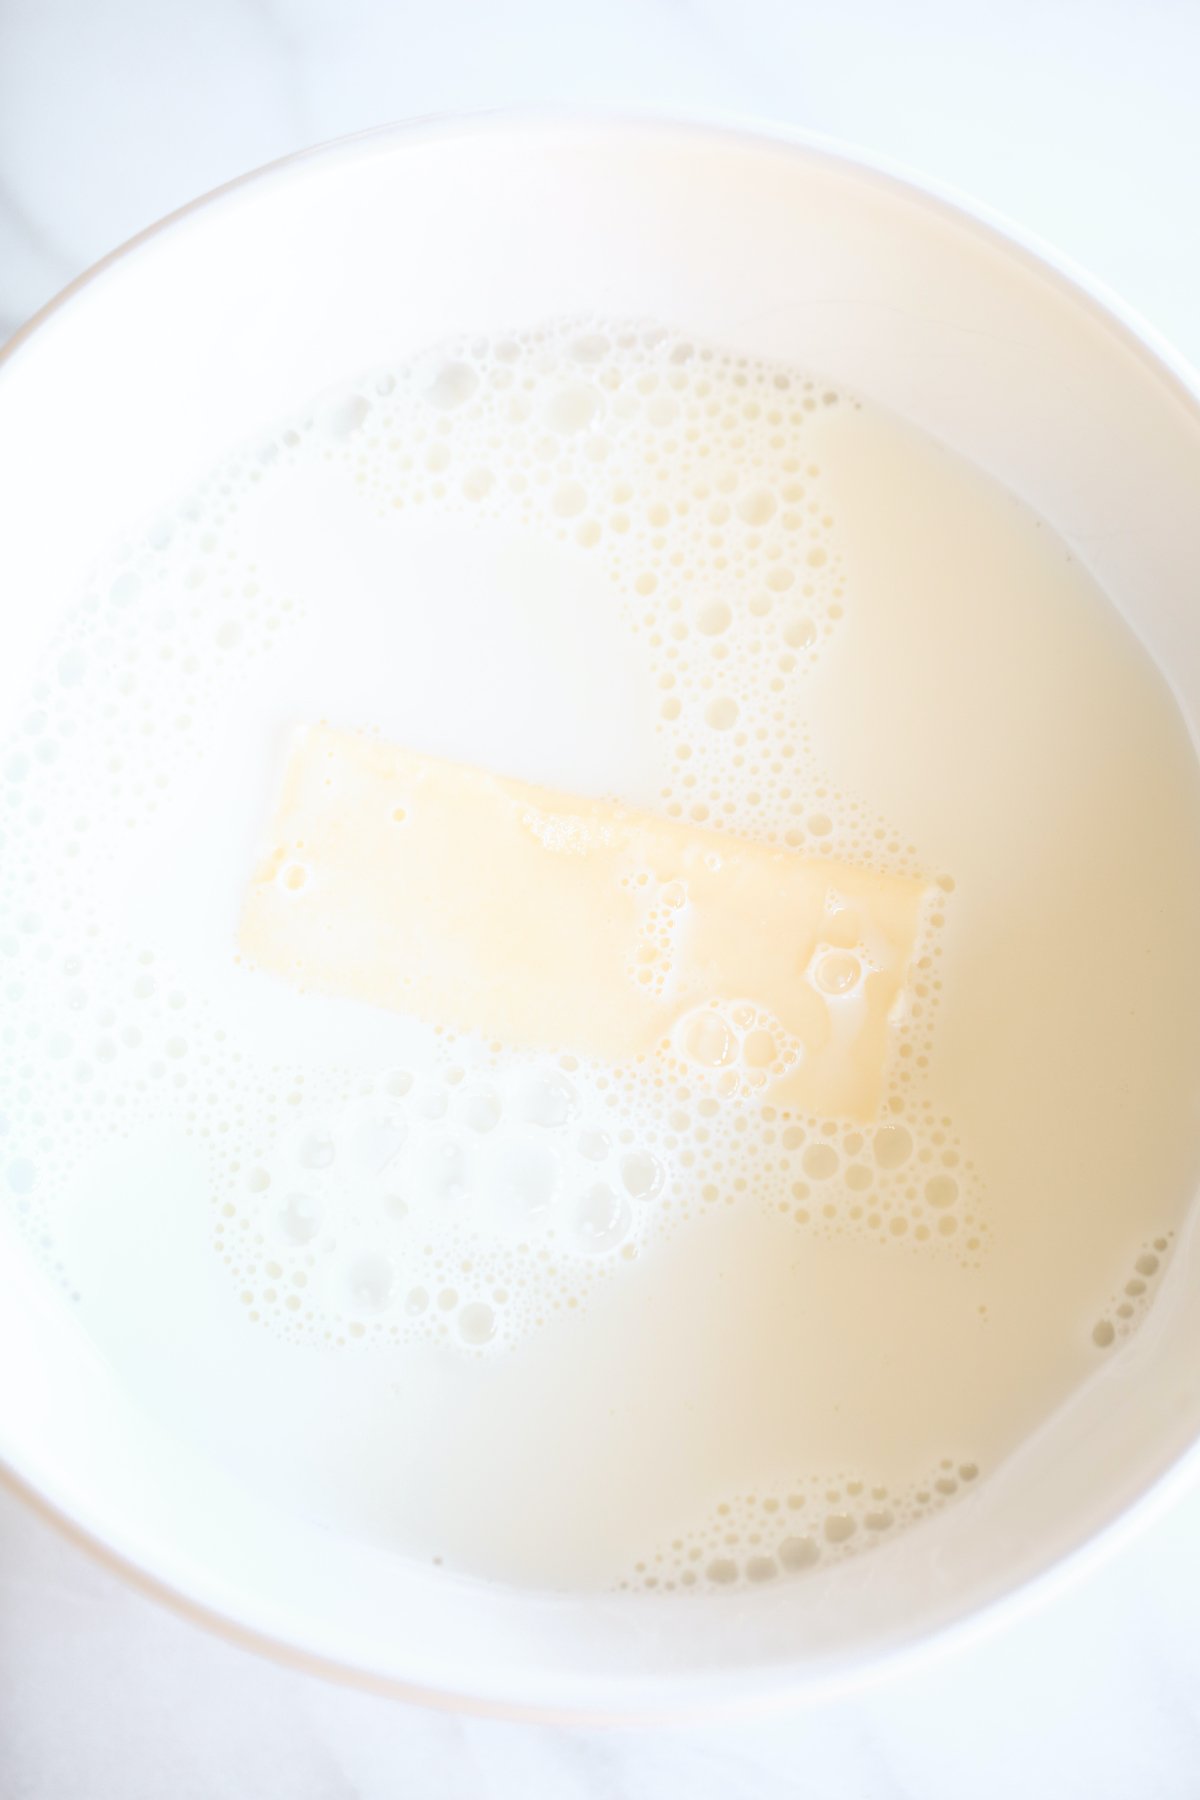 A stick of butter inside a bowl of milk.